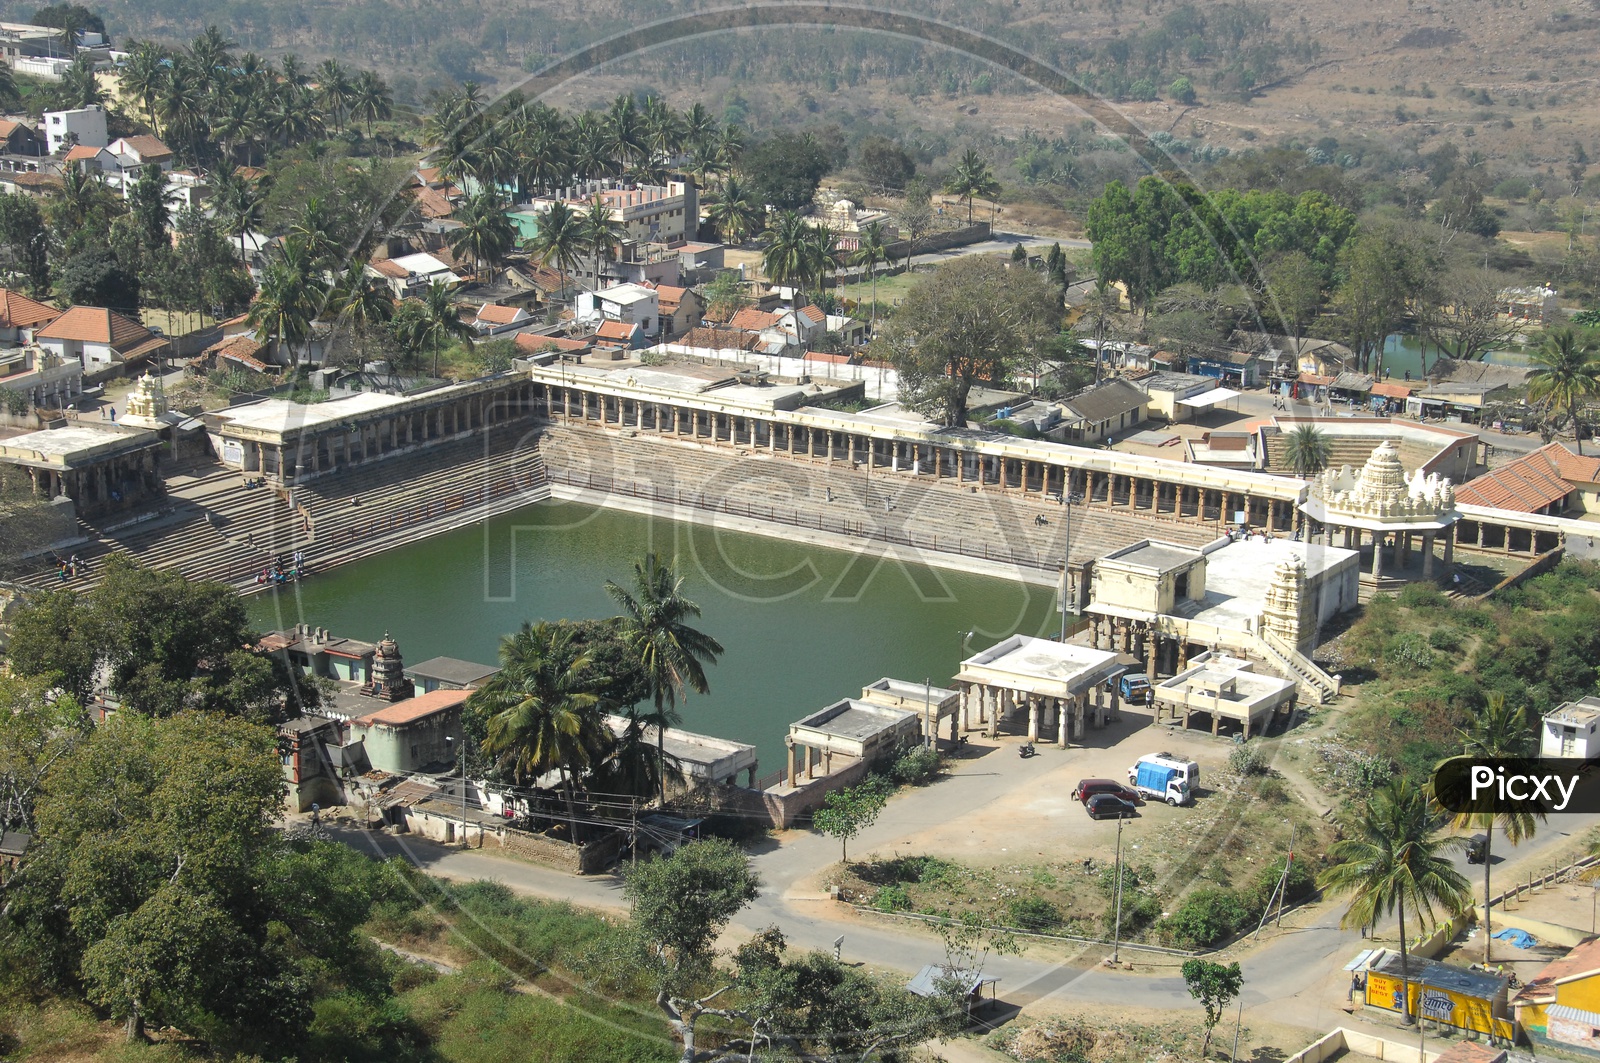 Top view of the Temple kolan at Hampi